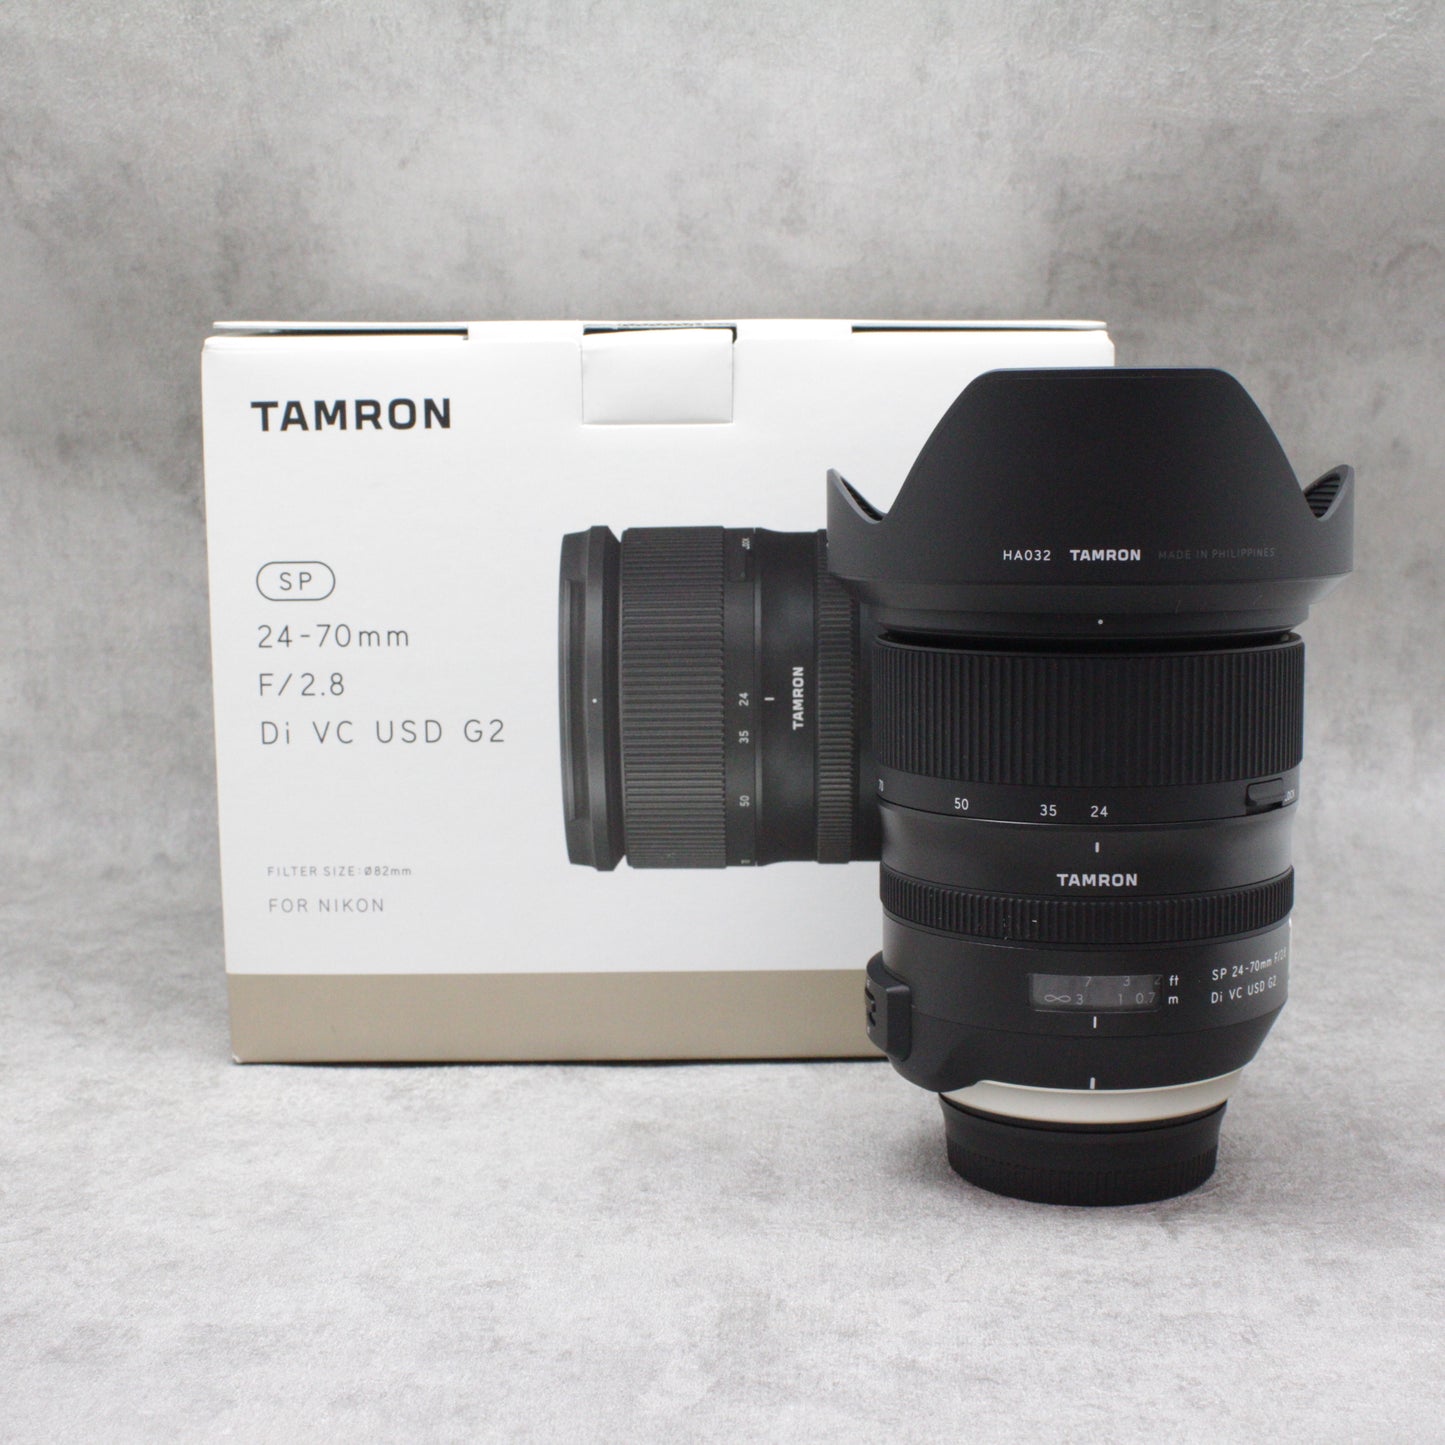 中古品 TAMRON SP 24-70mm F/2.8 Di VC USD G2 (Model A032) Nikon用